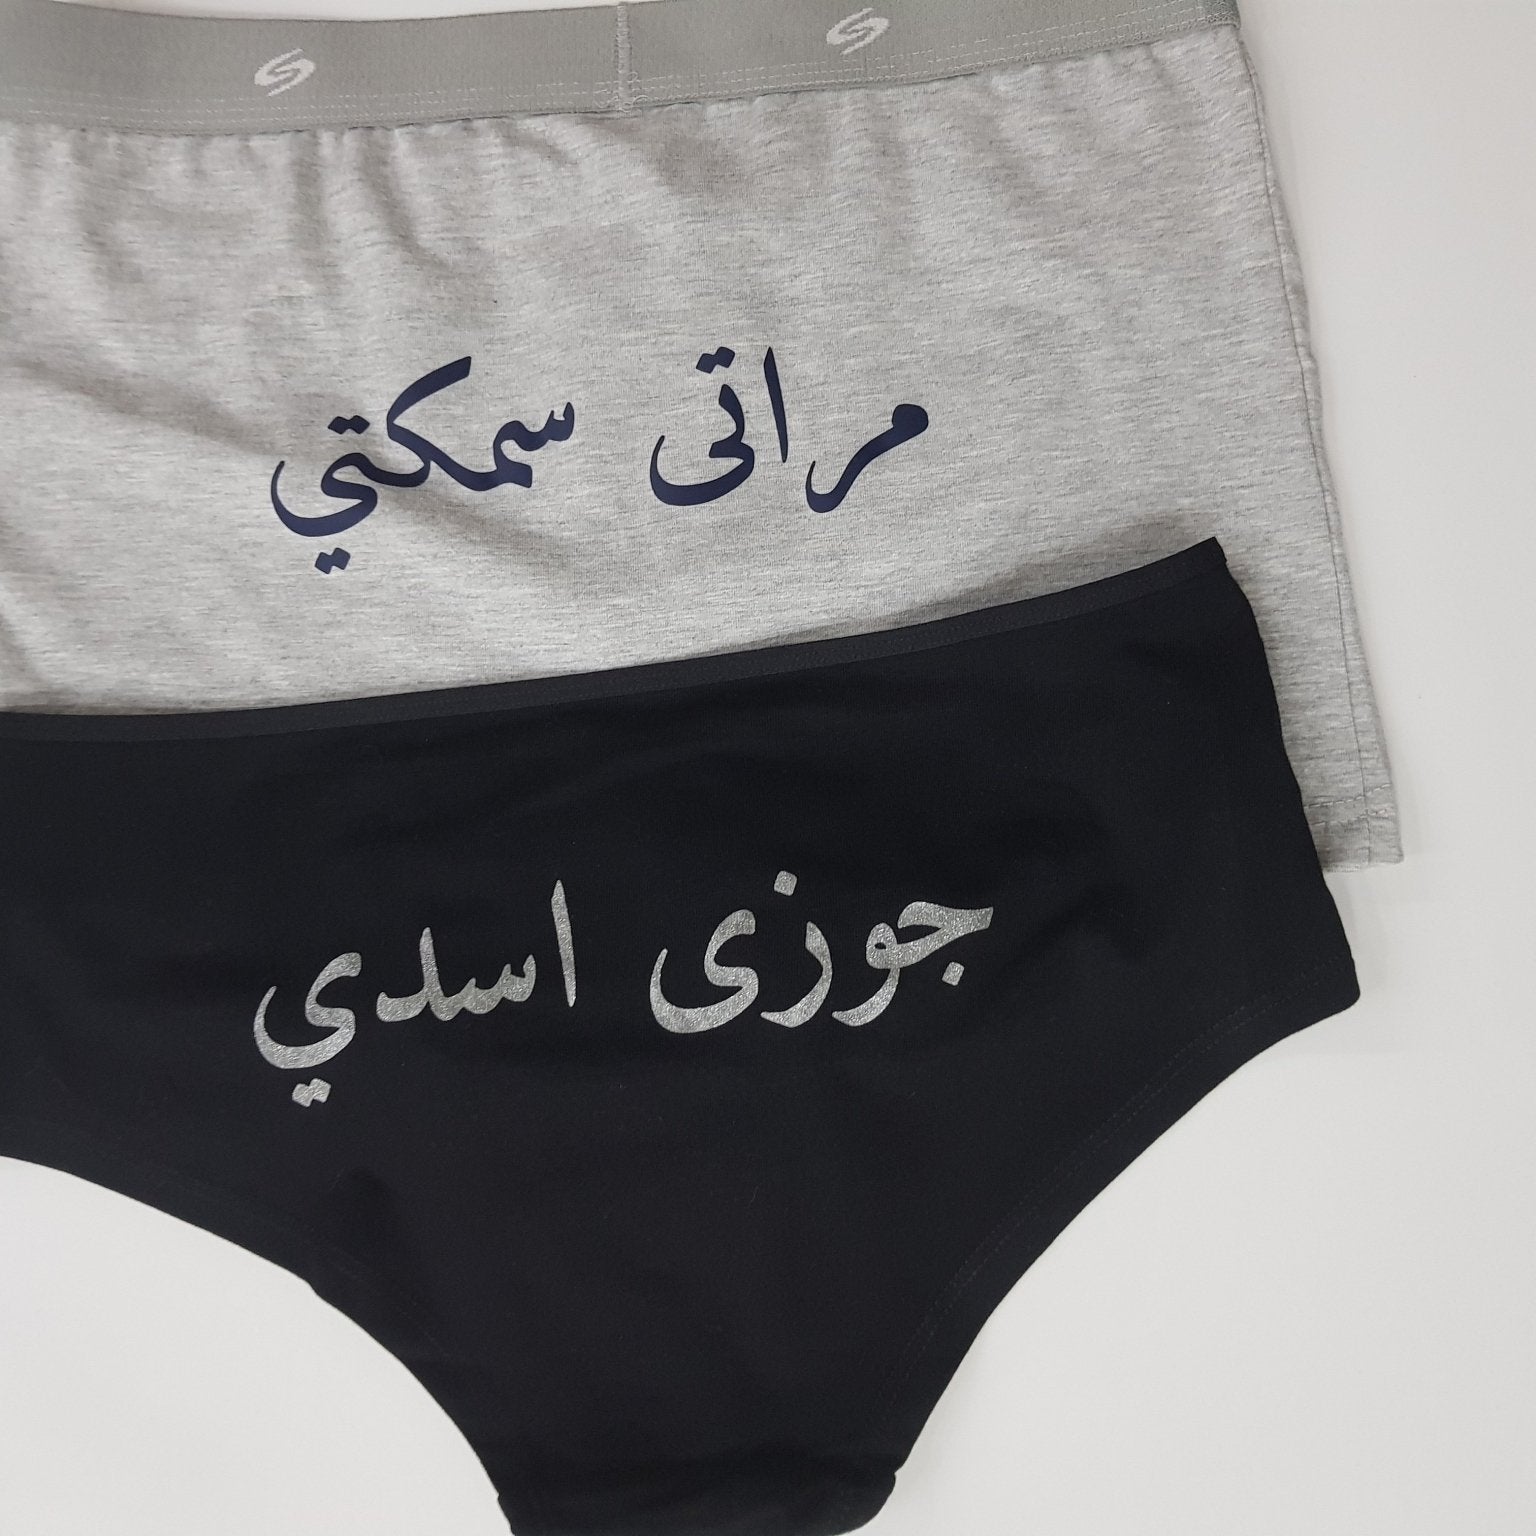 Couple underwear - Samakty/Asady - Etba3lly